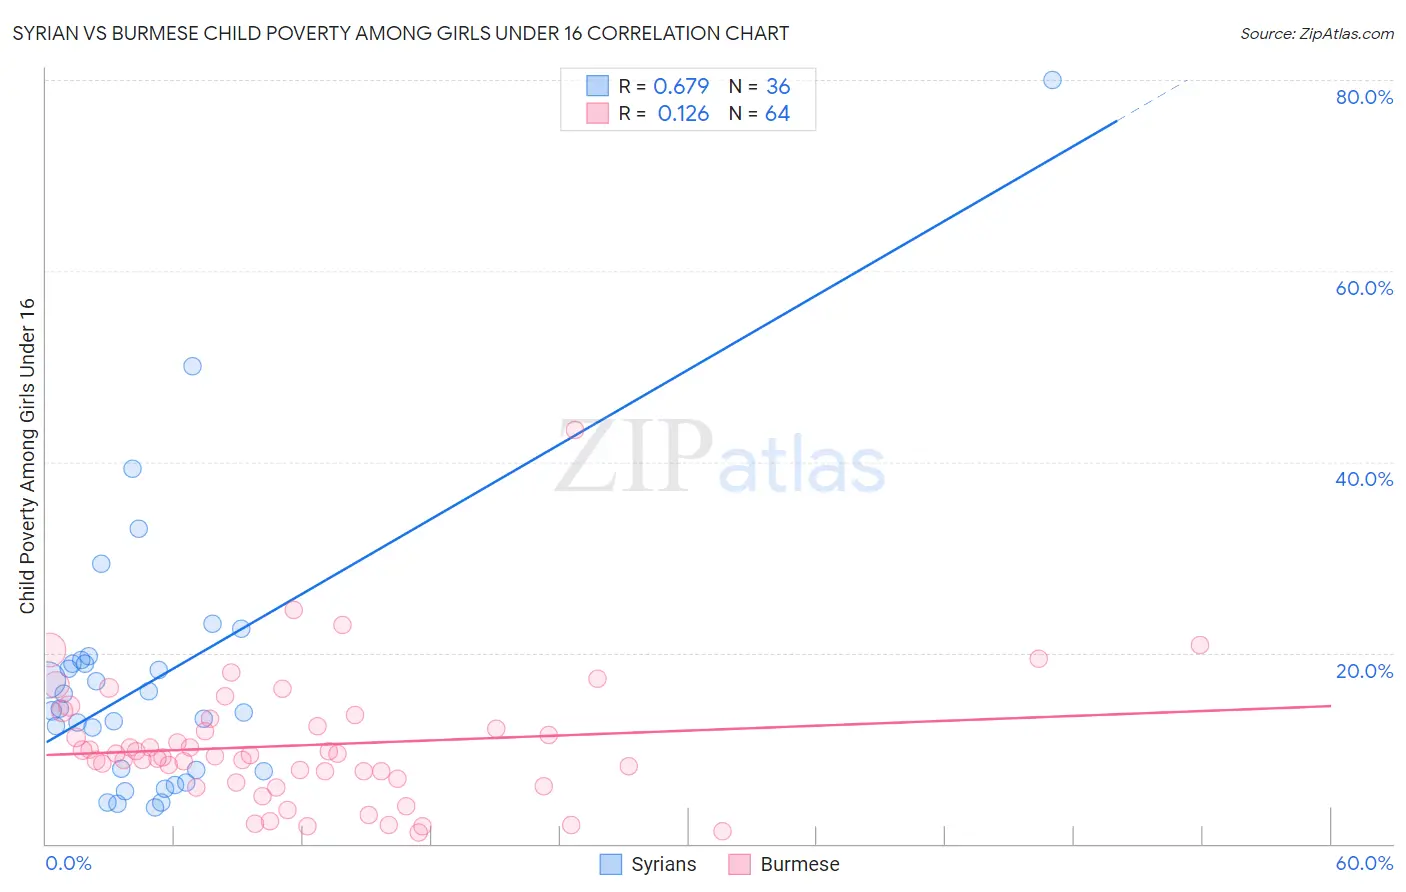 Syrian vs Burmese Child Poverty Among Girls Under 16